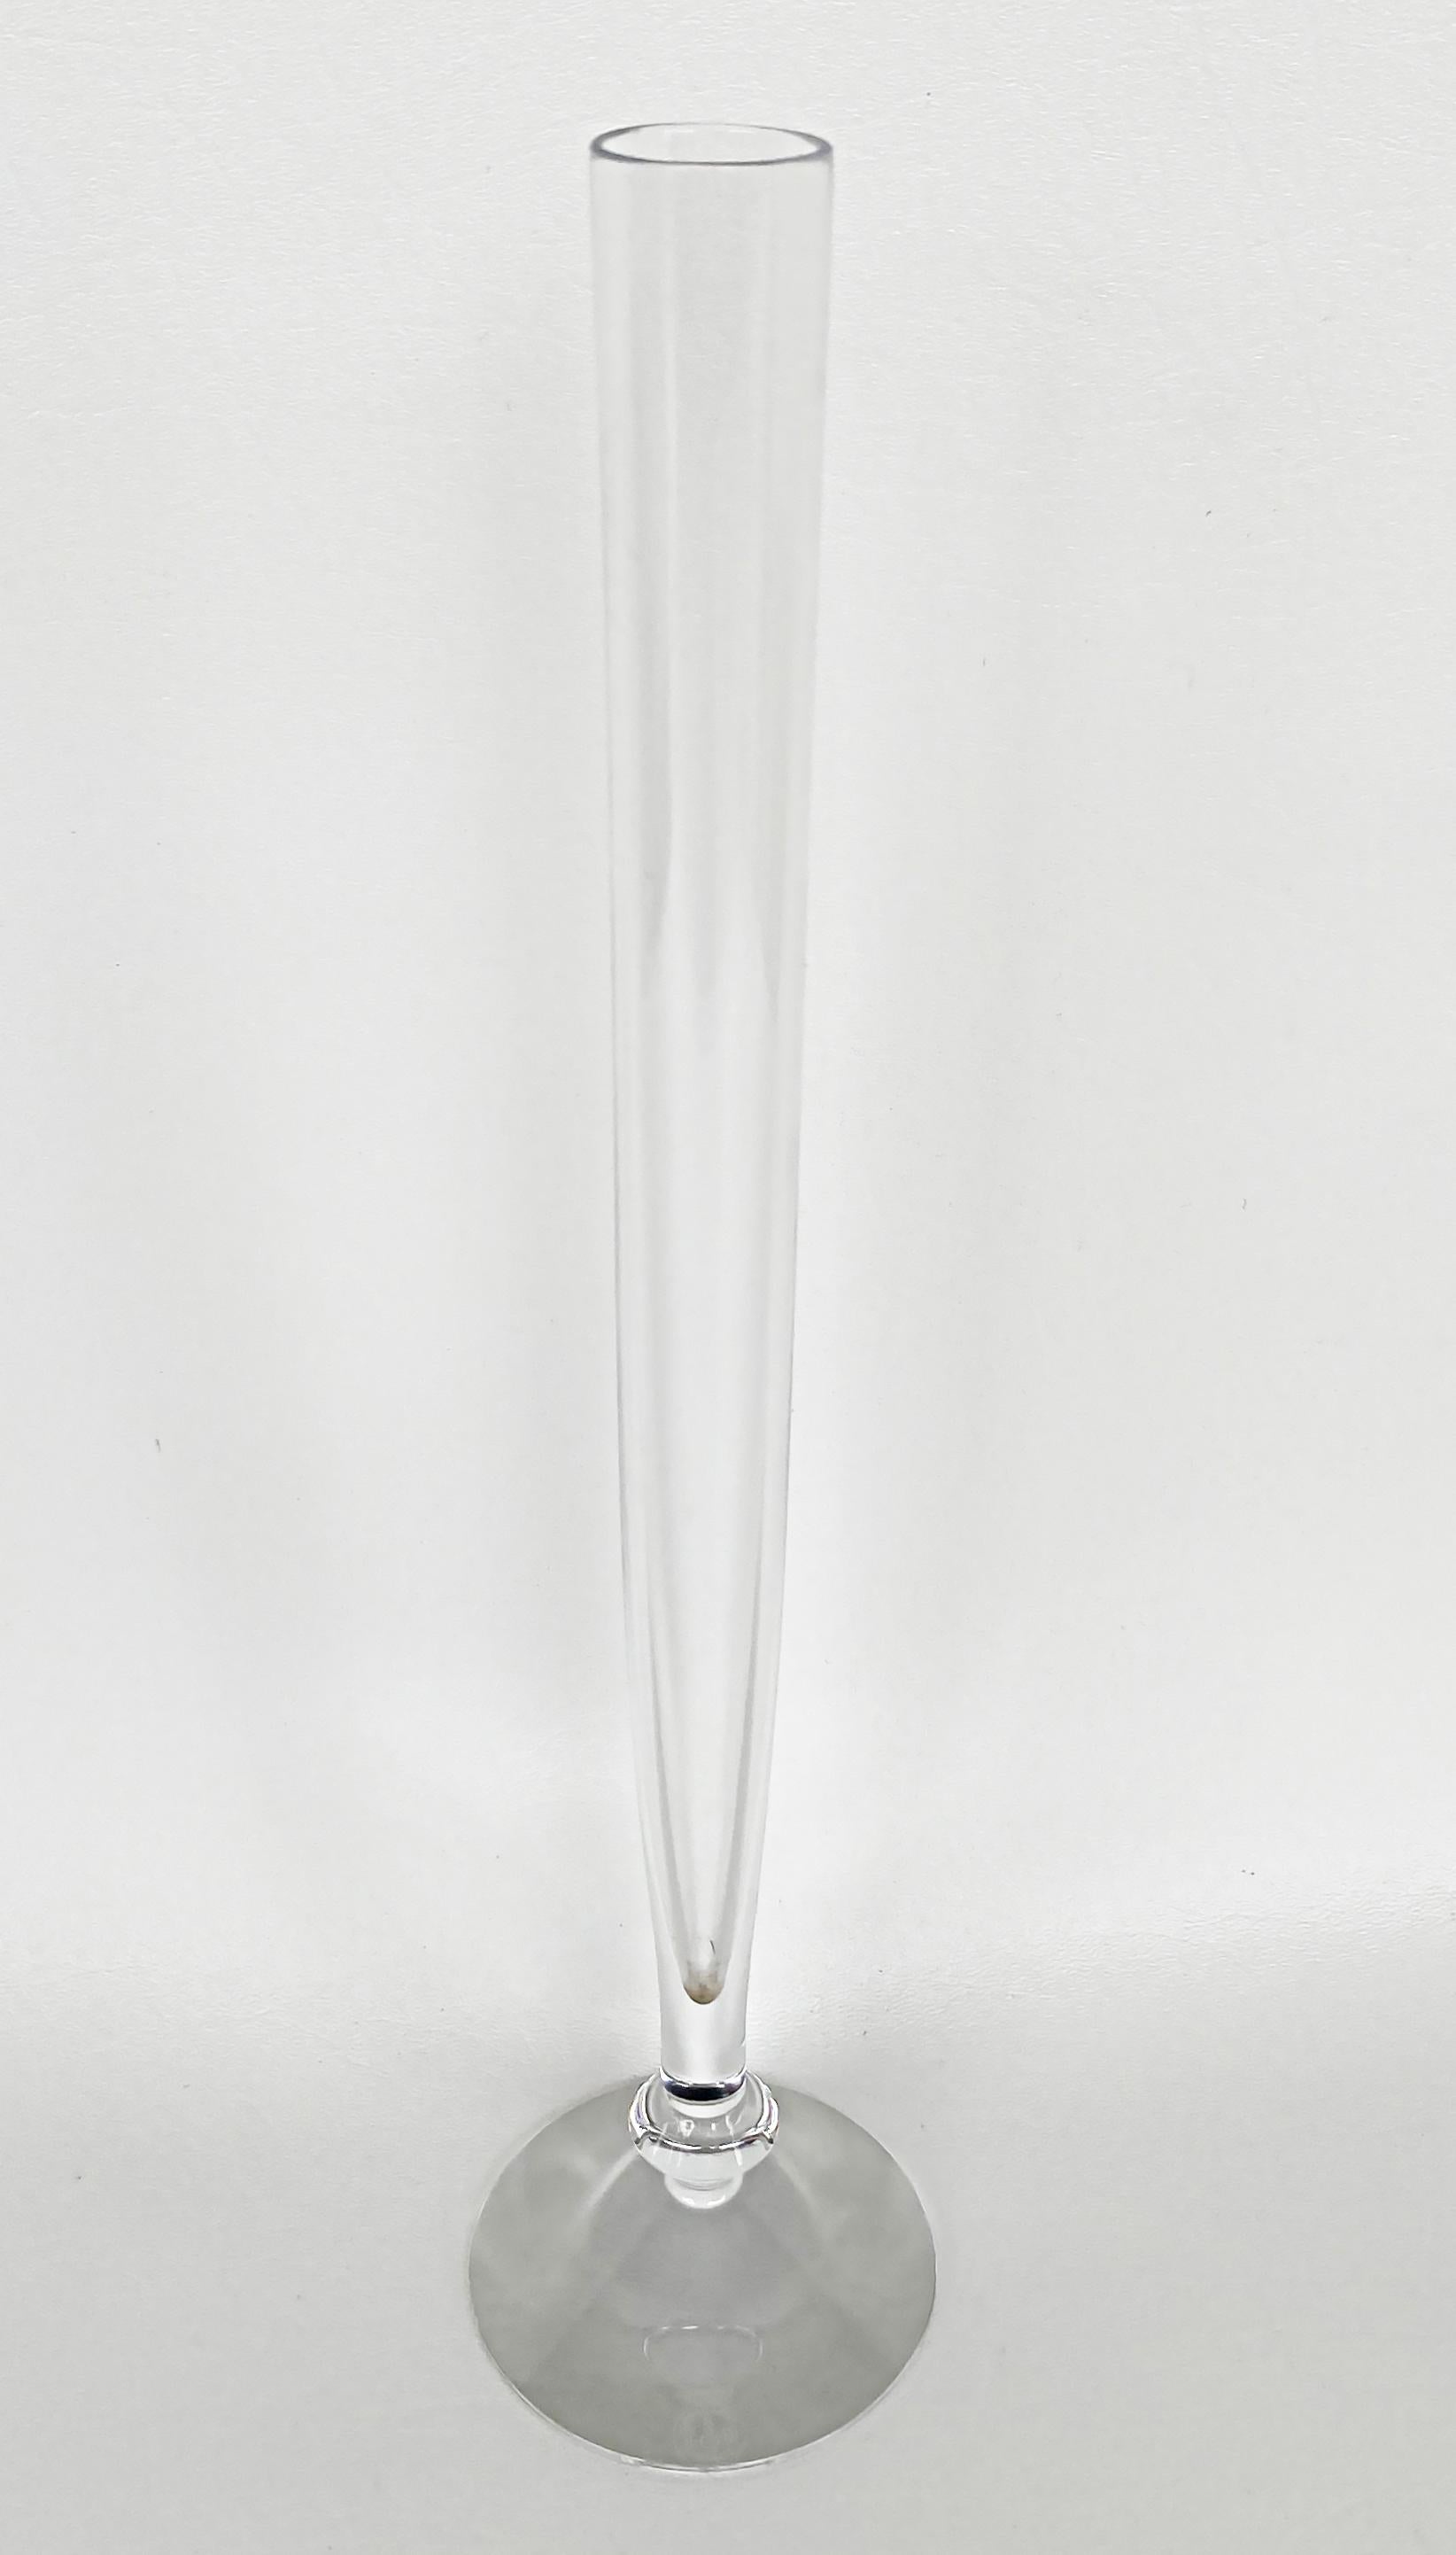 Baccarat France crystal bud vase.

Offered for sale is a tall and slender signed Baccarat France crystal bud vase. The base is signed in 2 places. The vase is 12.75